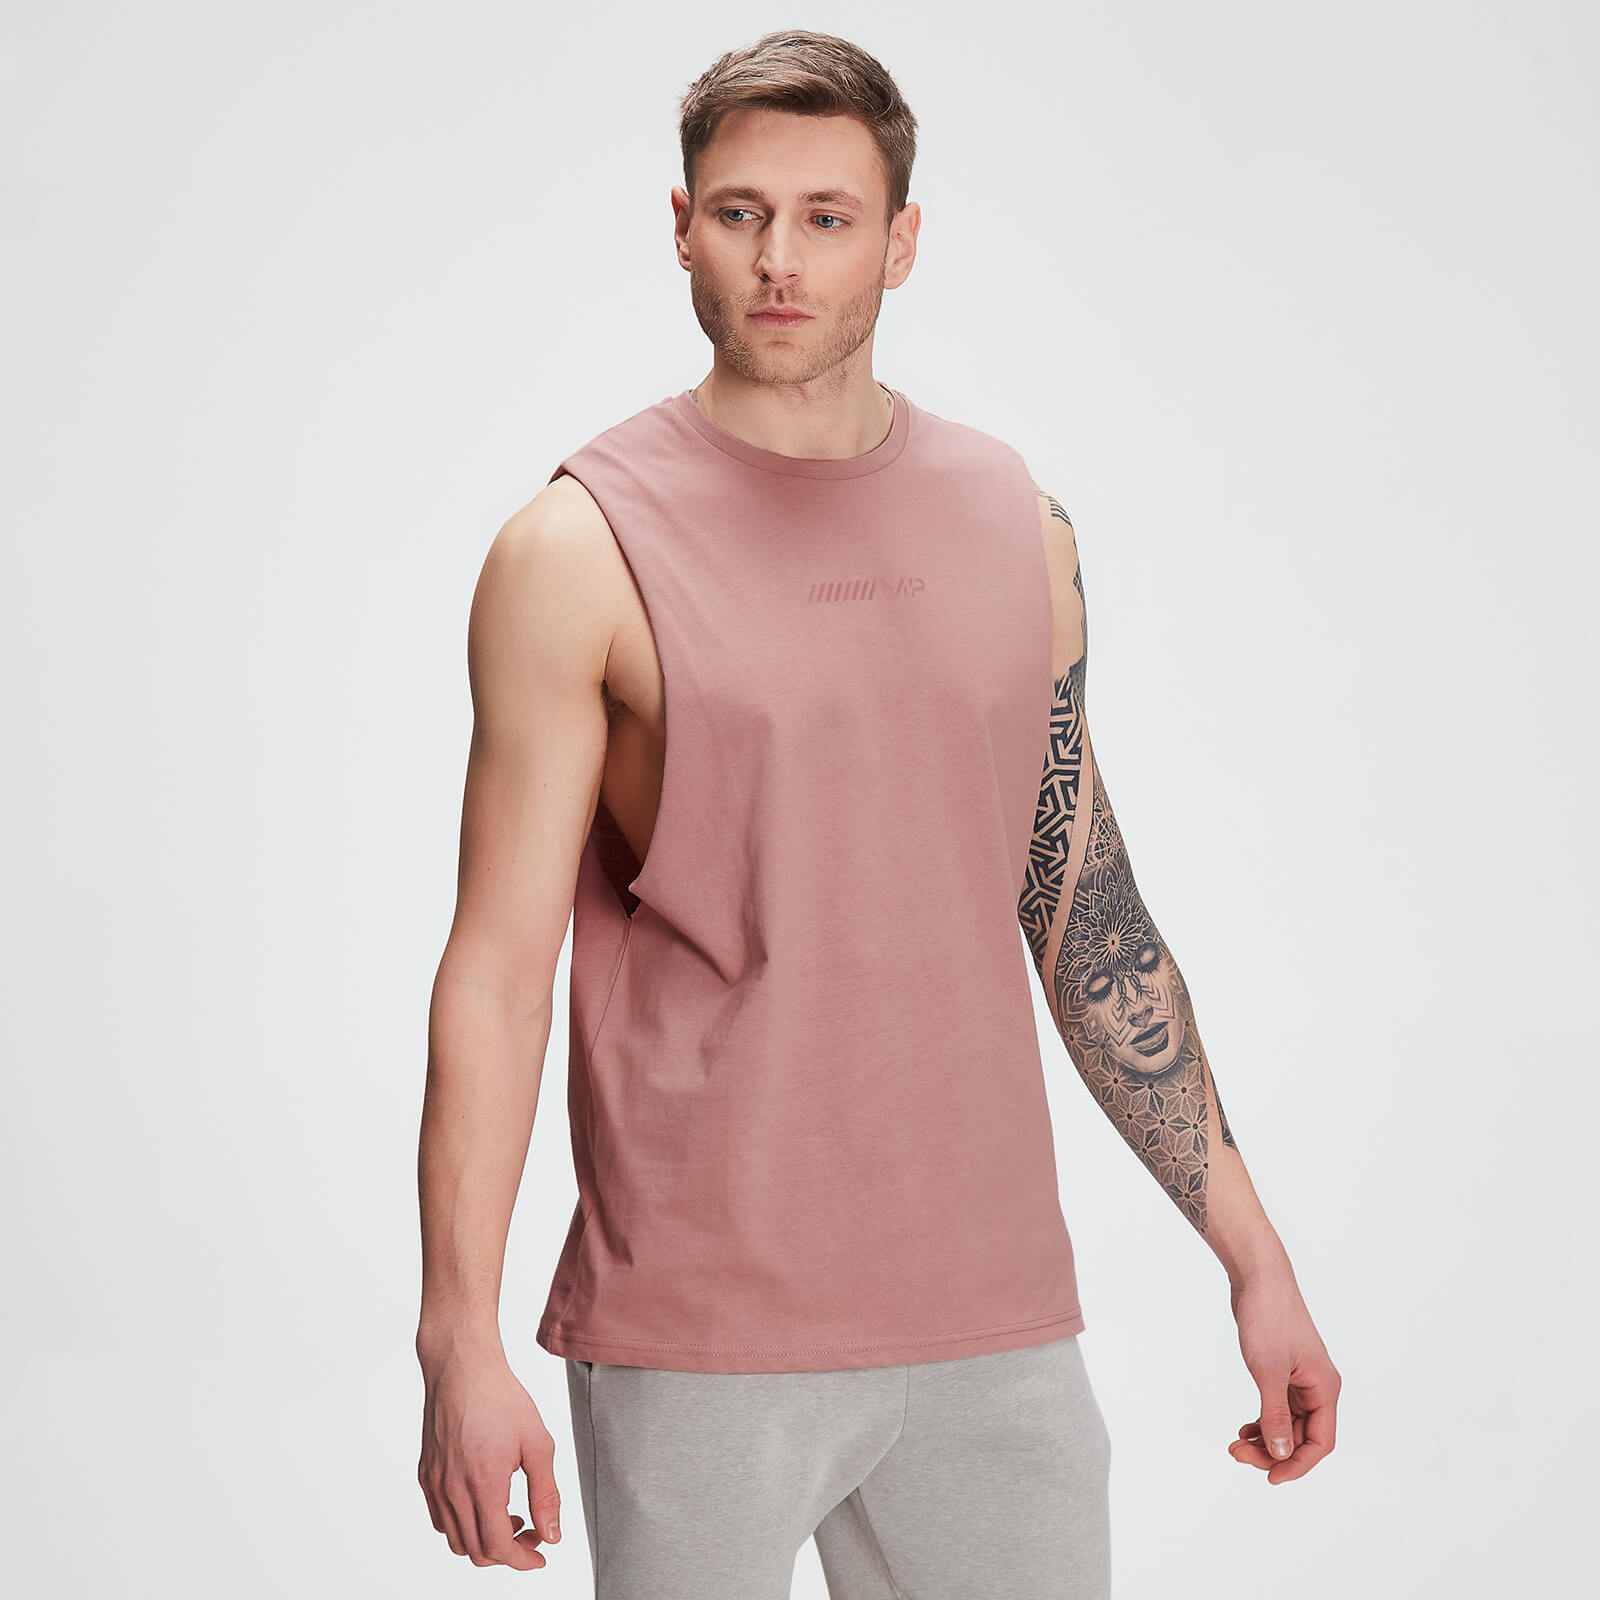 Mp Camiseta sin mangas Tonal Graphic para hombre de  - Rosa lavado - XXXL